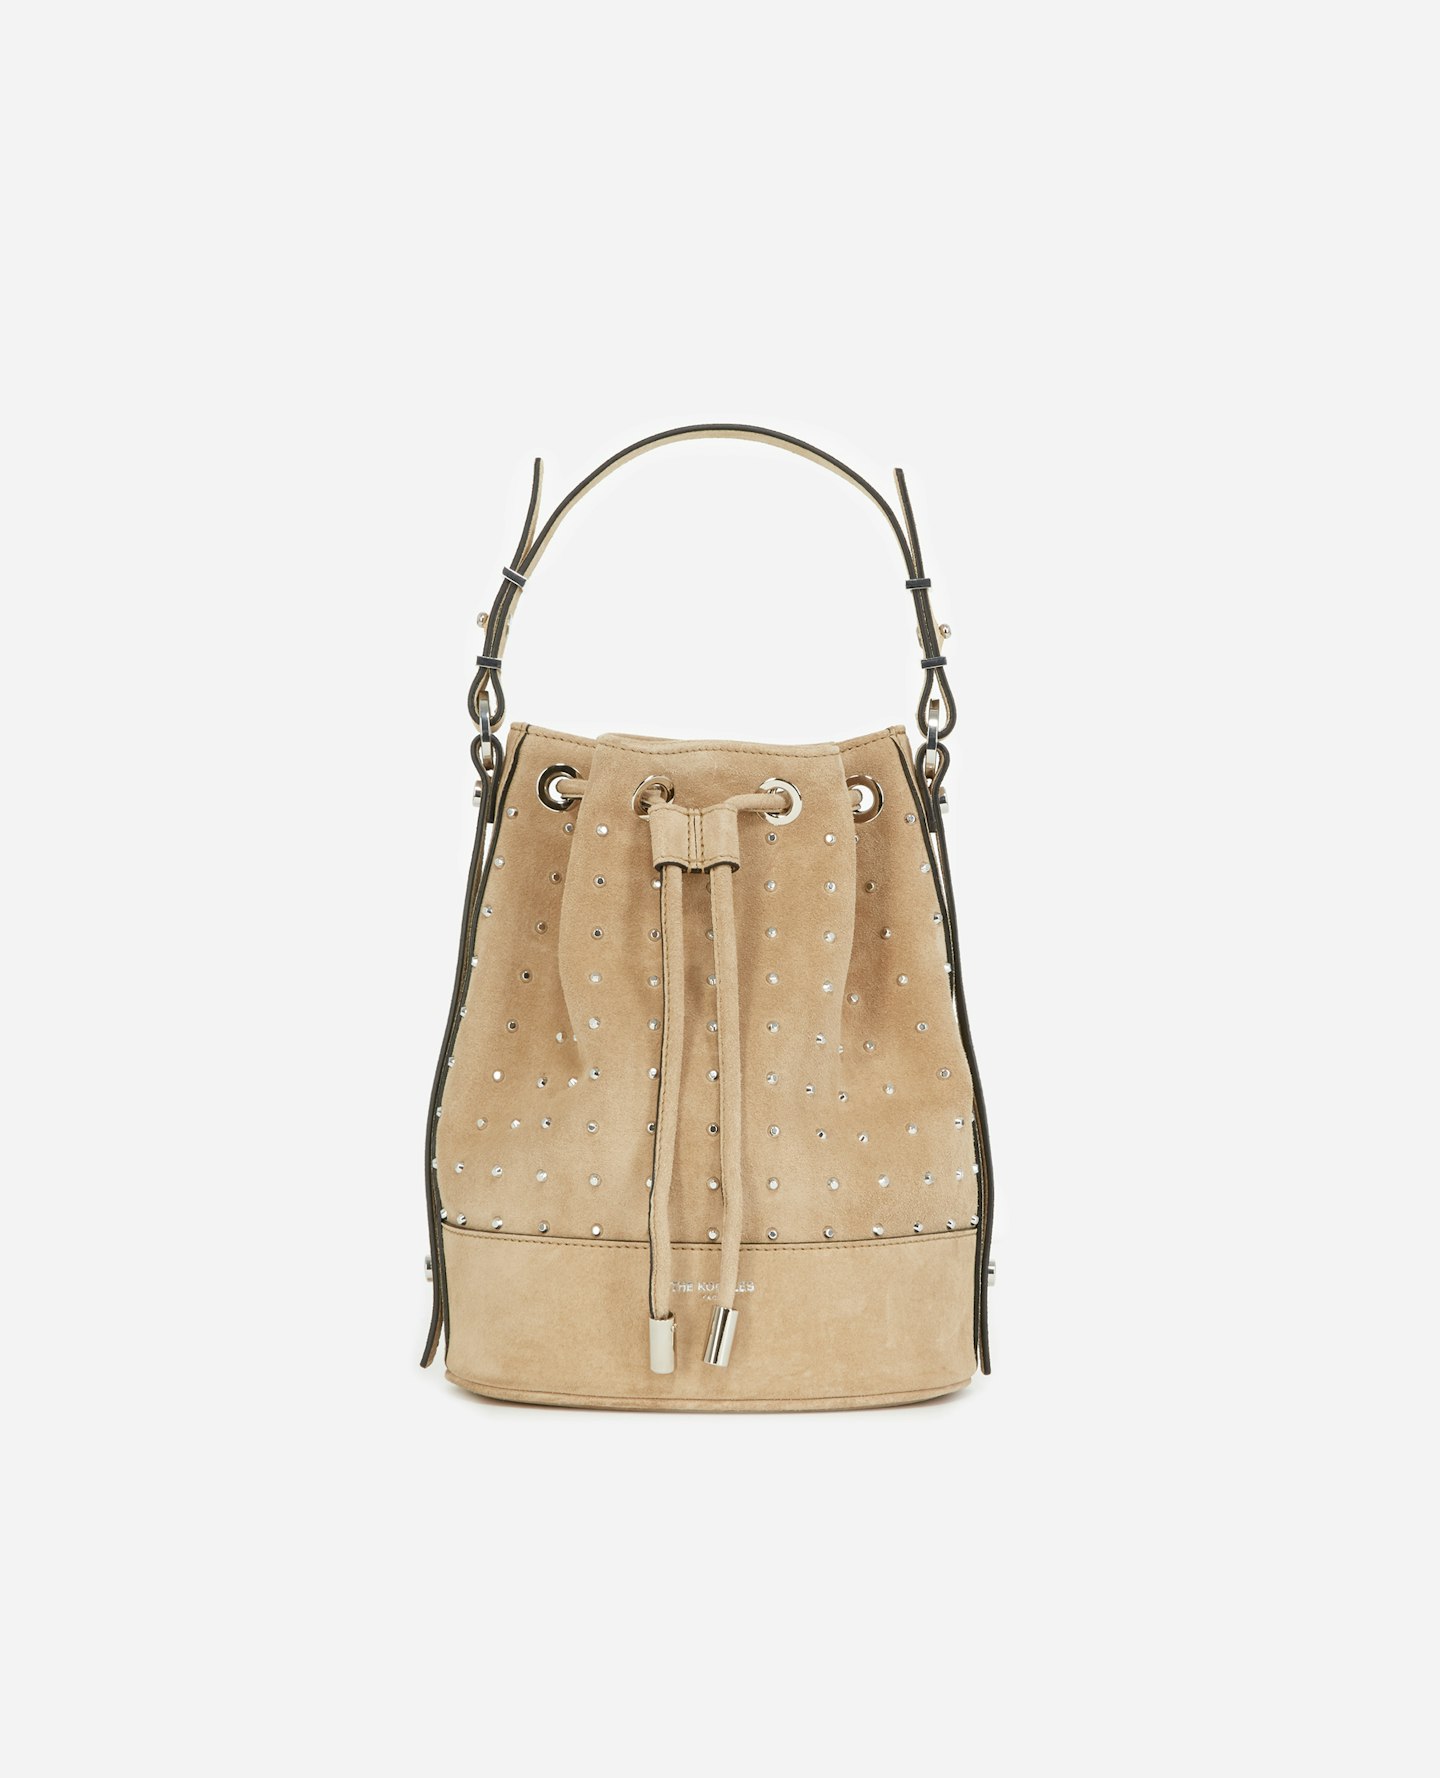 The Kooples, Studded Medium Tina Bag In Beige Suede, £335